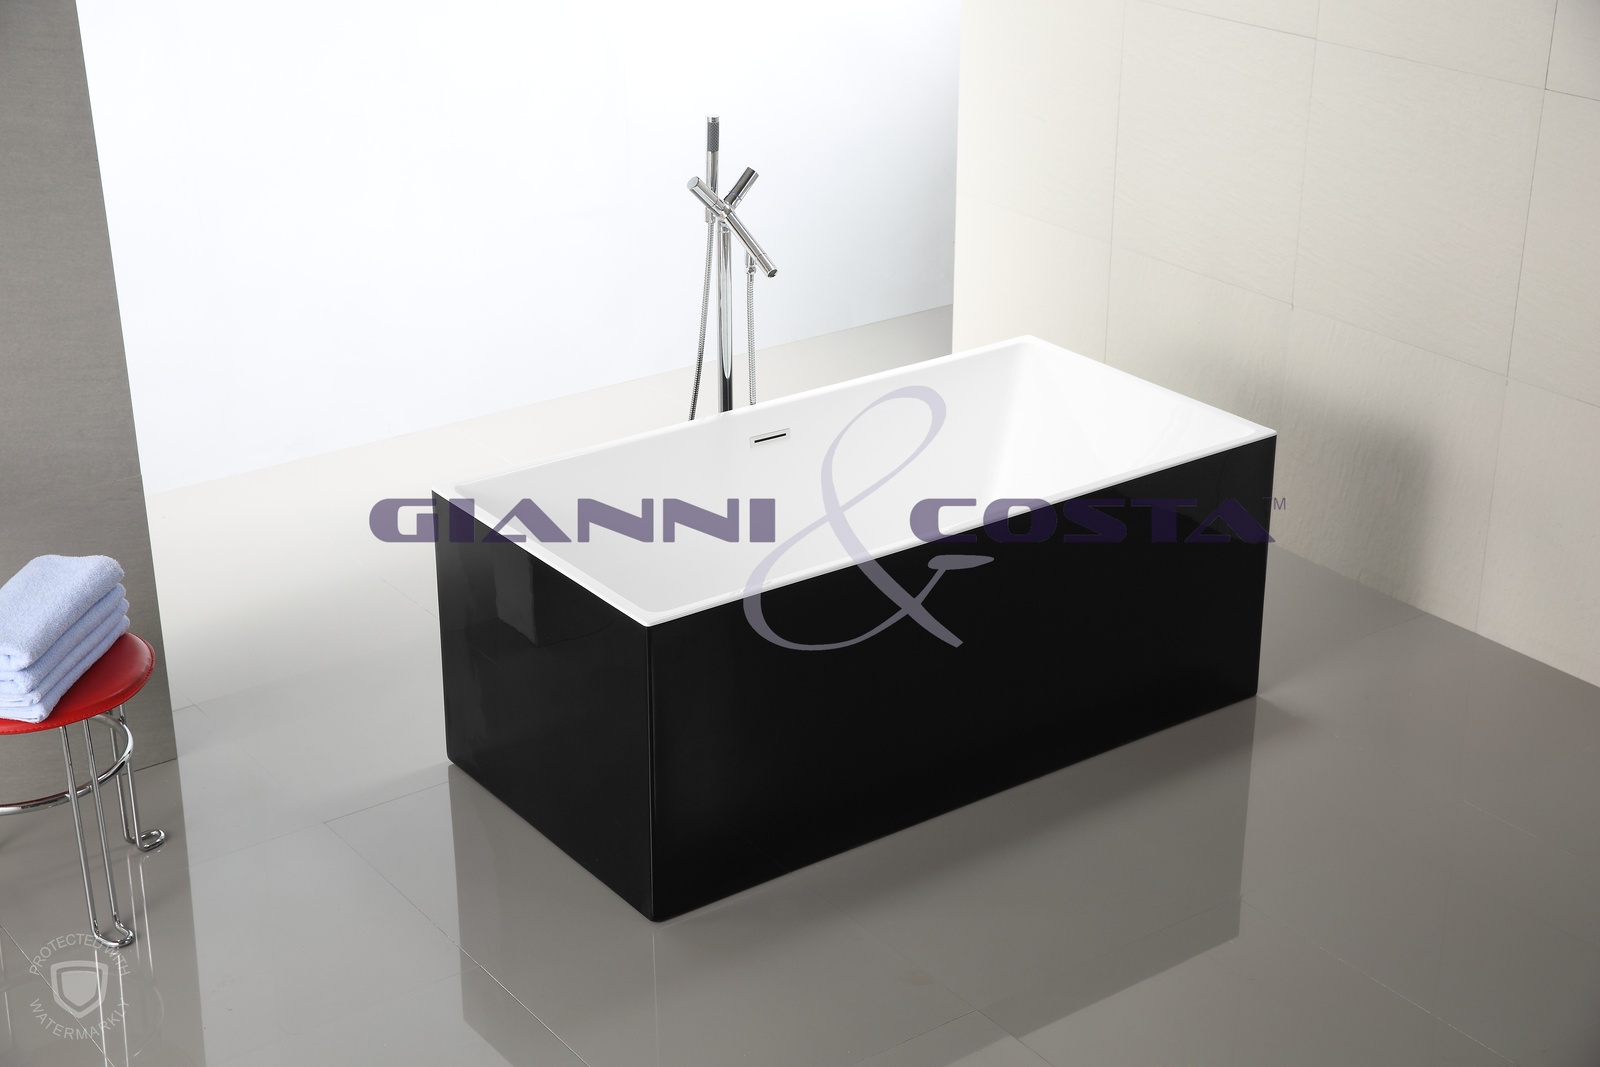 Acrylic Free Standing Bath Tub - Black - Model Santina GC6816 1500mm